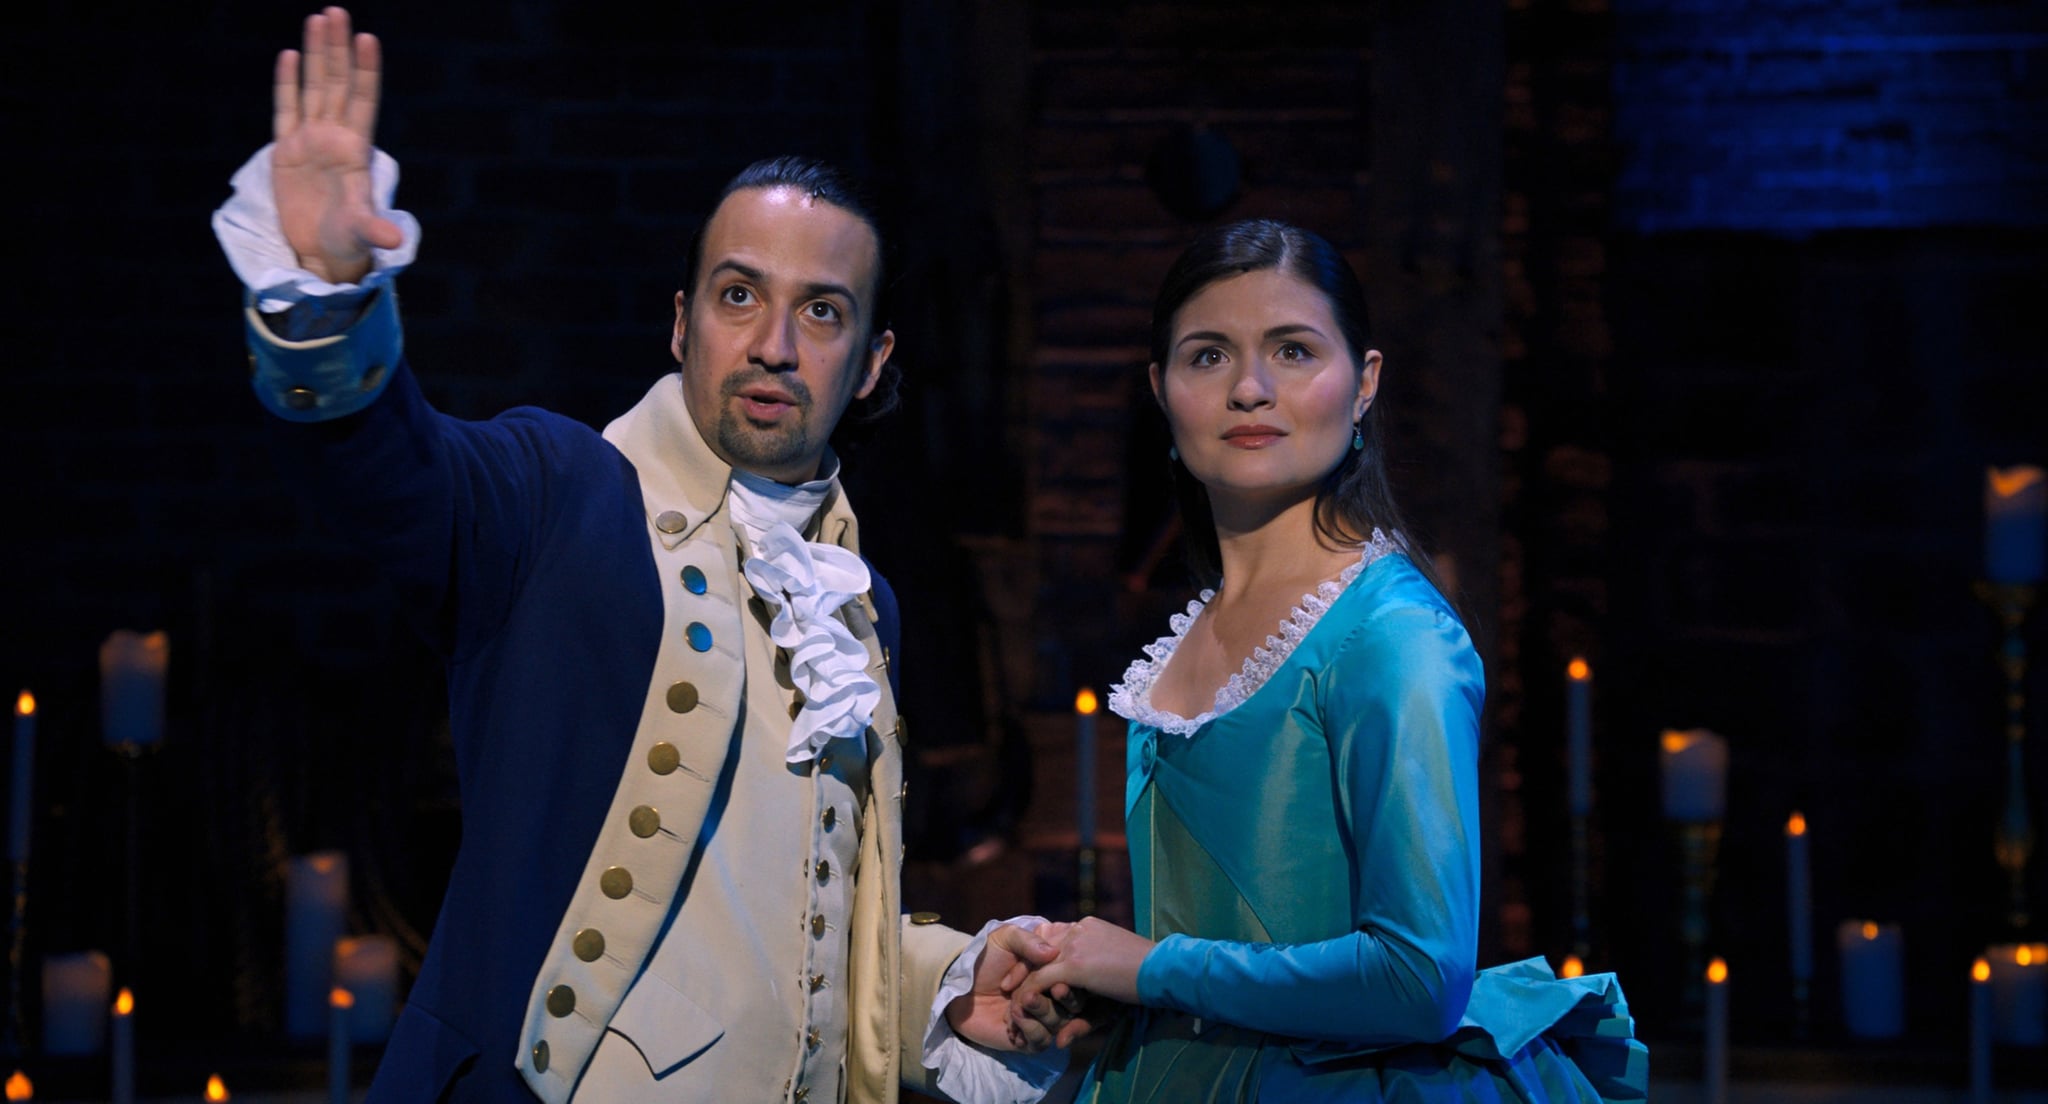 HAMILTON, from left: Lin-Manuel Miranda as Alexander Hamilton, Phillipa Soo as Eliza Hamilton, 2020.  Disney+ / Courtesy Everett Collection